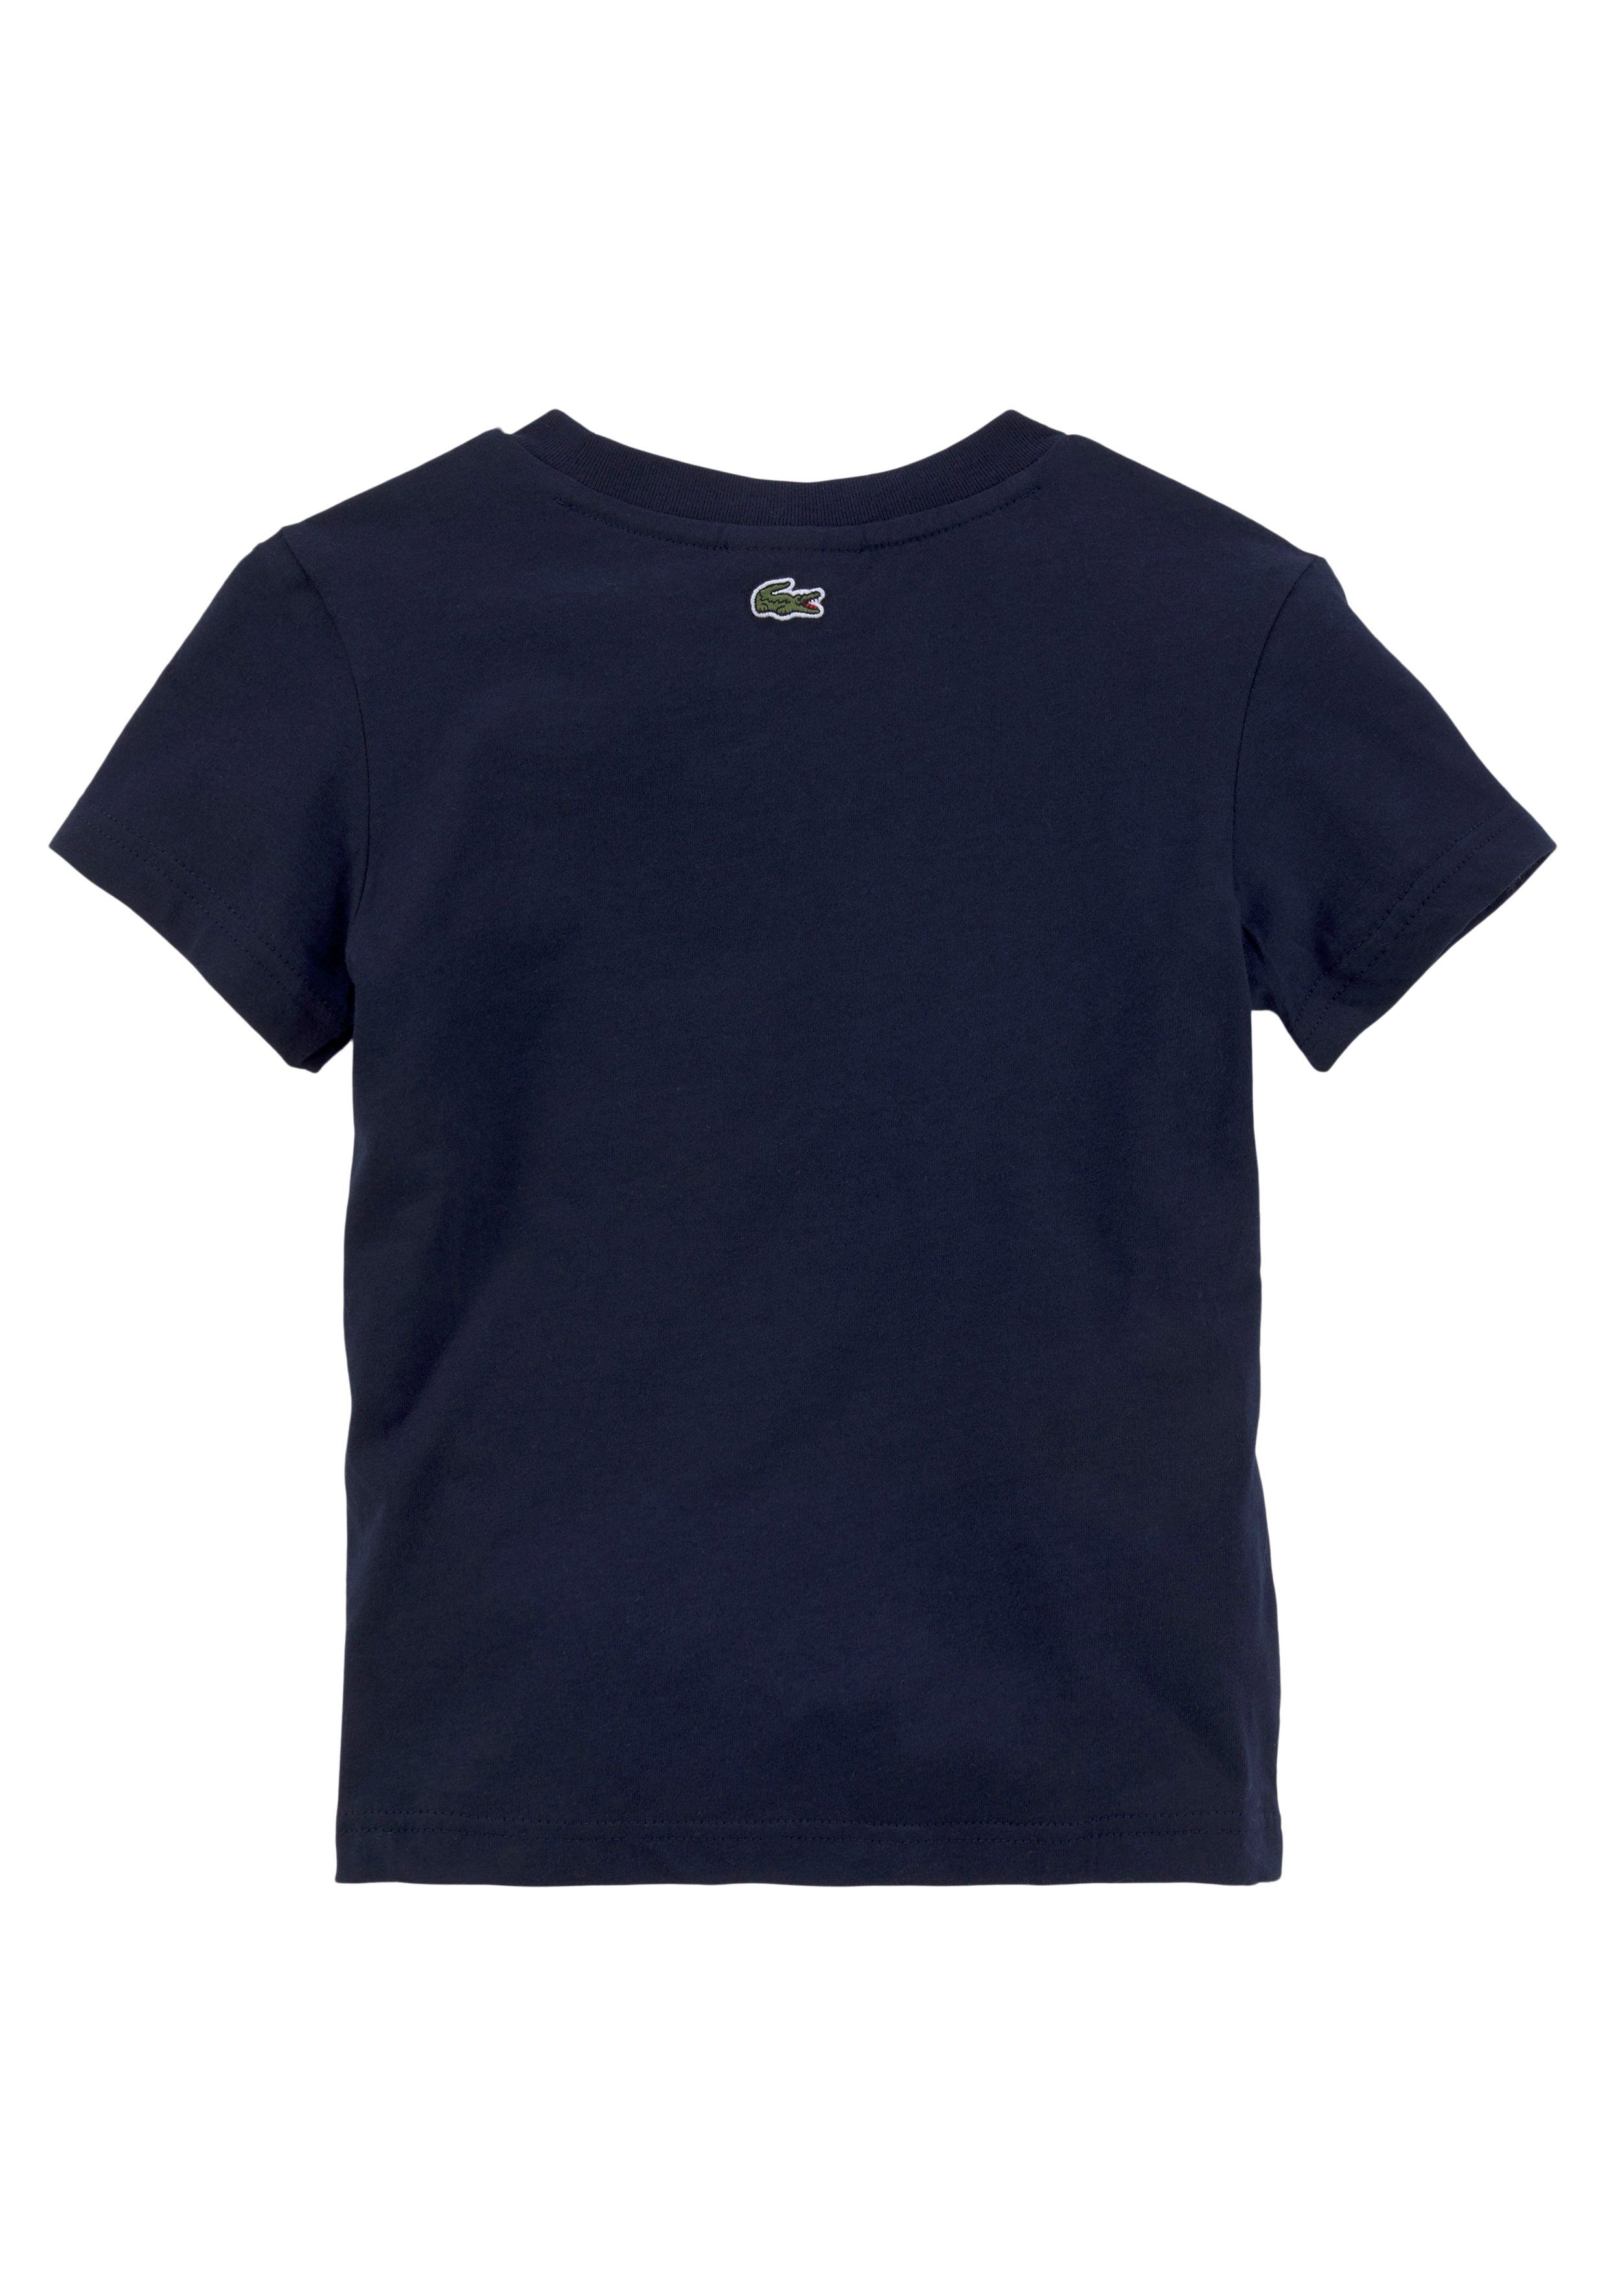 T-Shirt mit Lacoste Logodruck großem navy blue